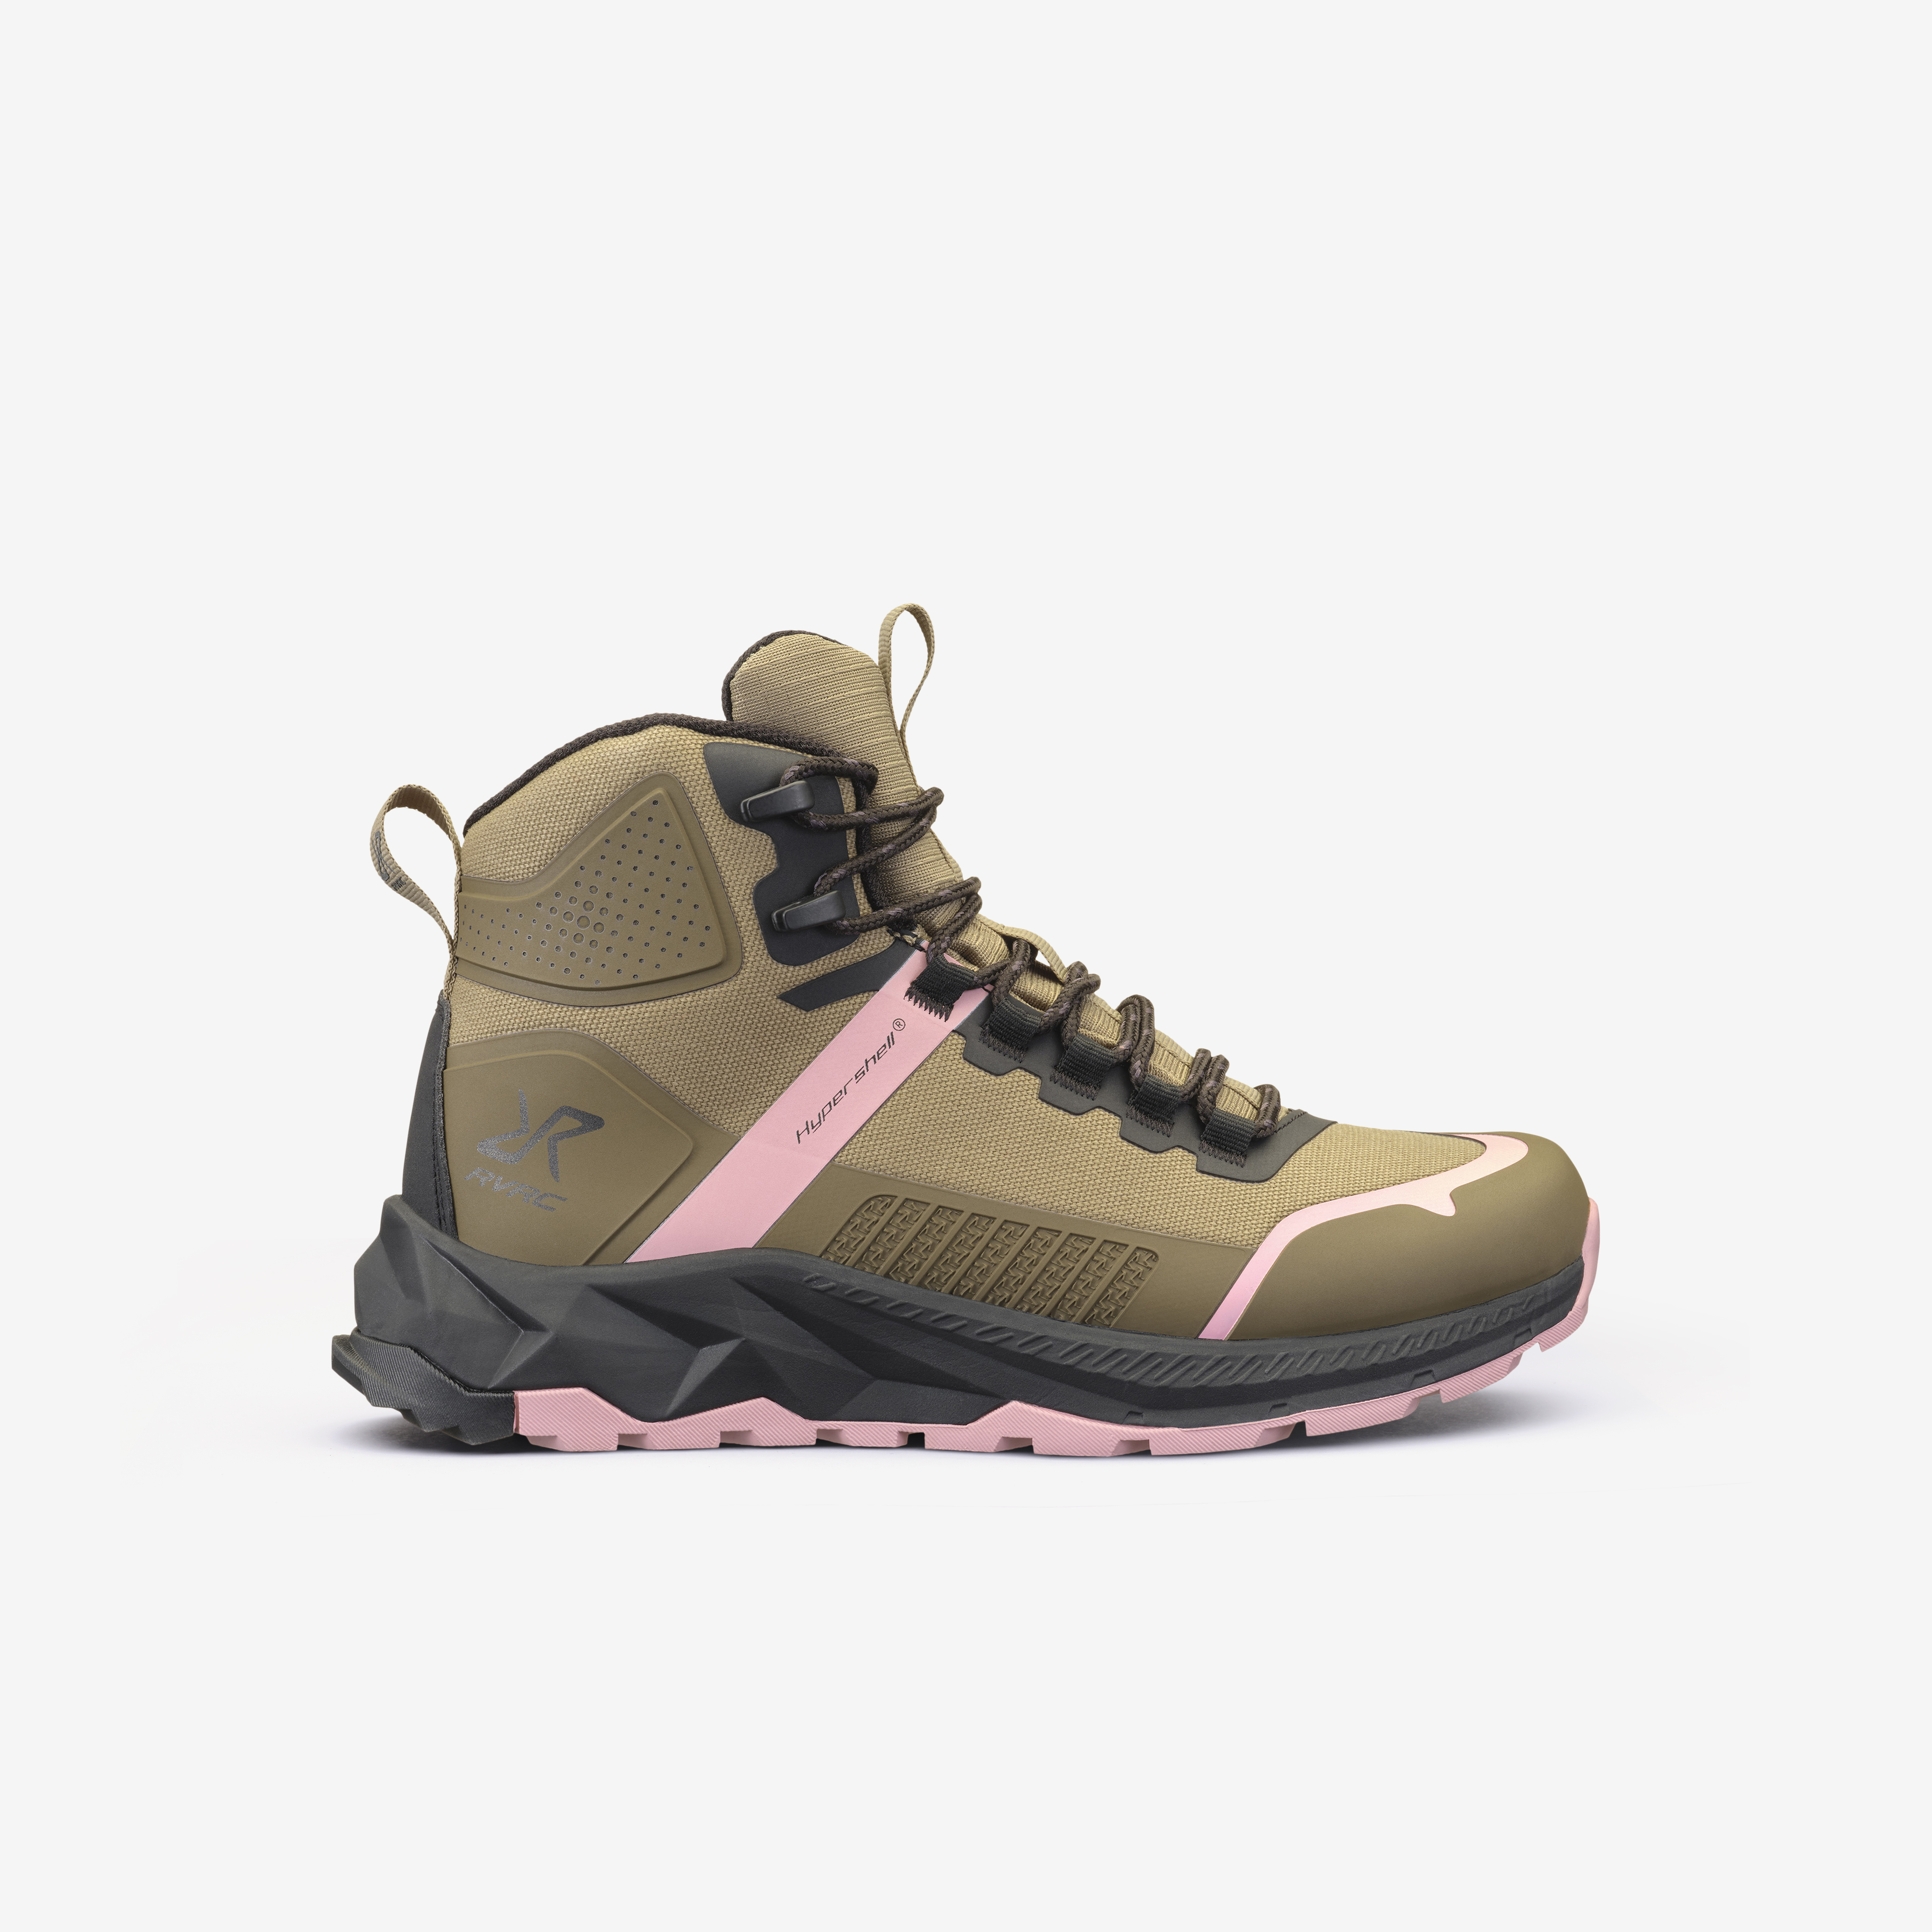 Phantom Trail Mid Waterproof Hiking Boots Khaki/Dusty Pink Donna